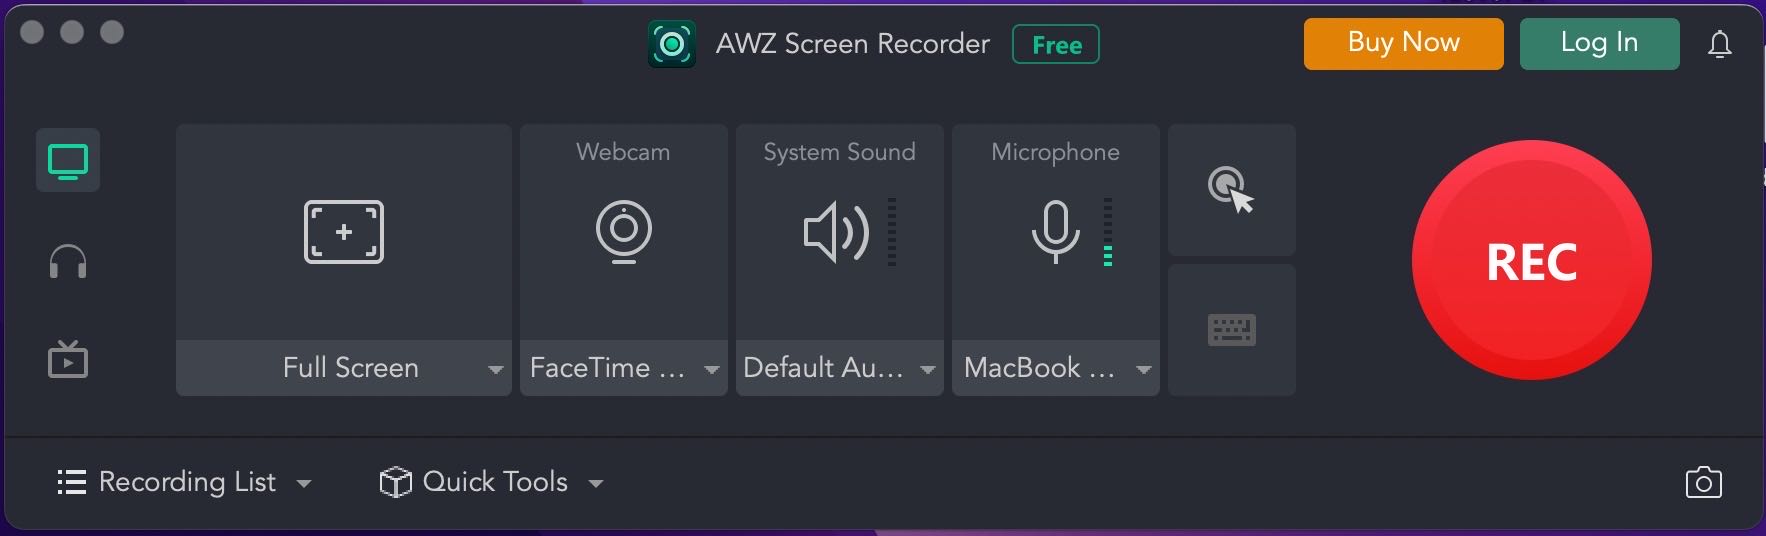 Record Webcam on Mac in AWZ Screen Recorder